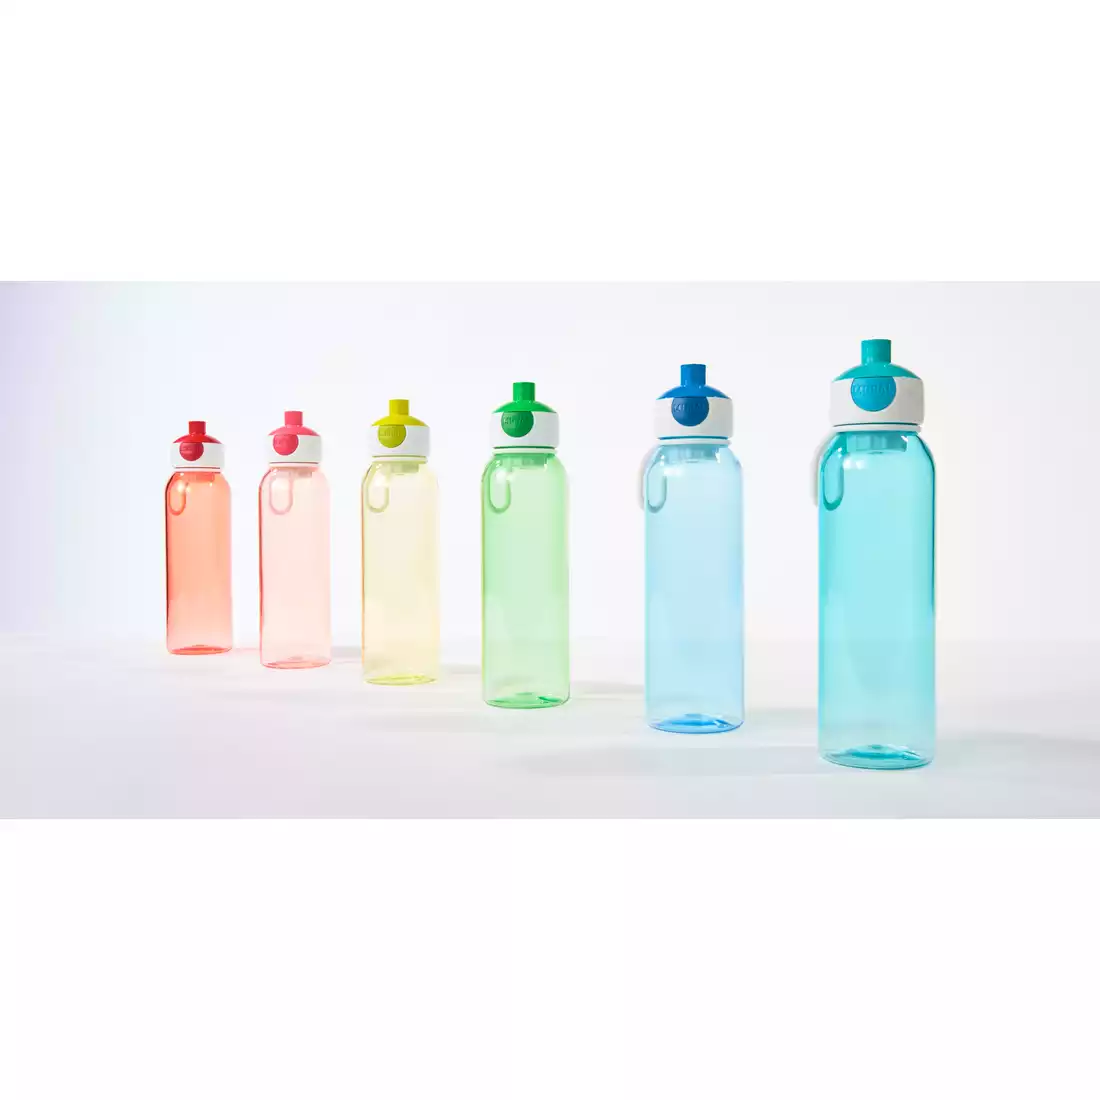 MEPAL CAMPUS water bottle 500ml, red